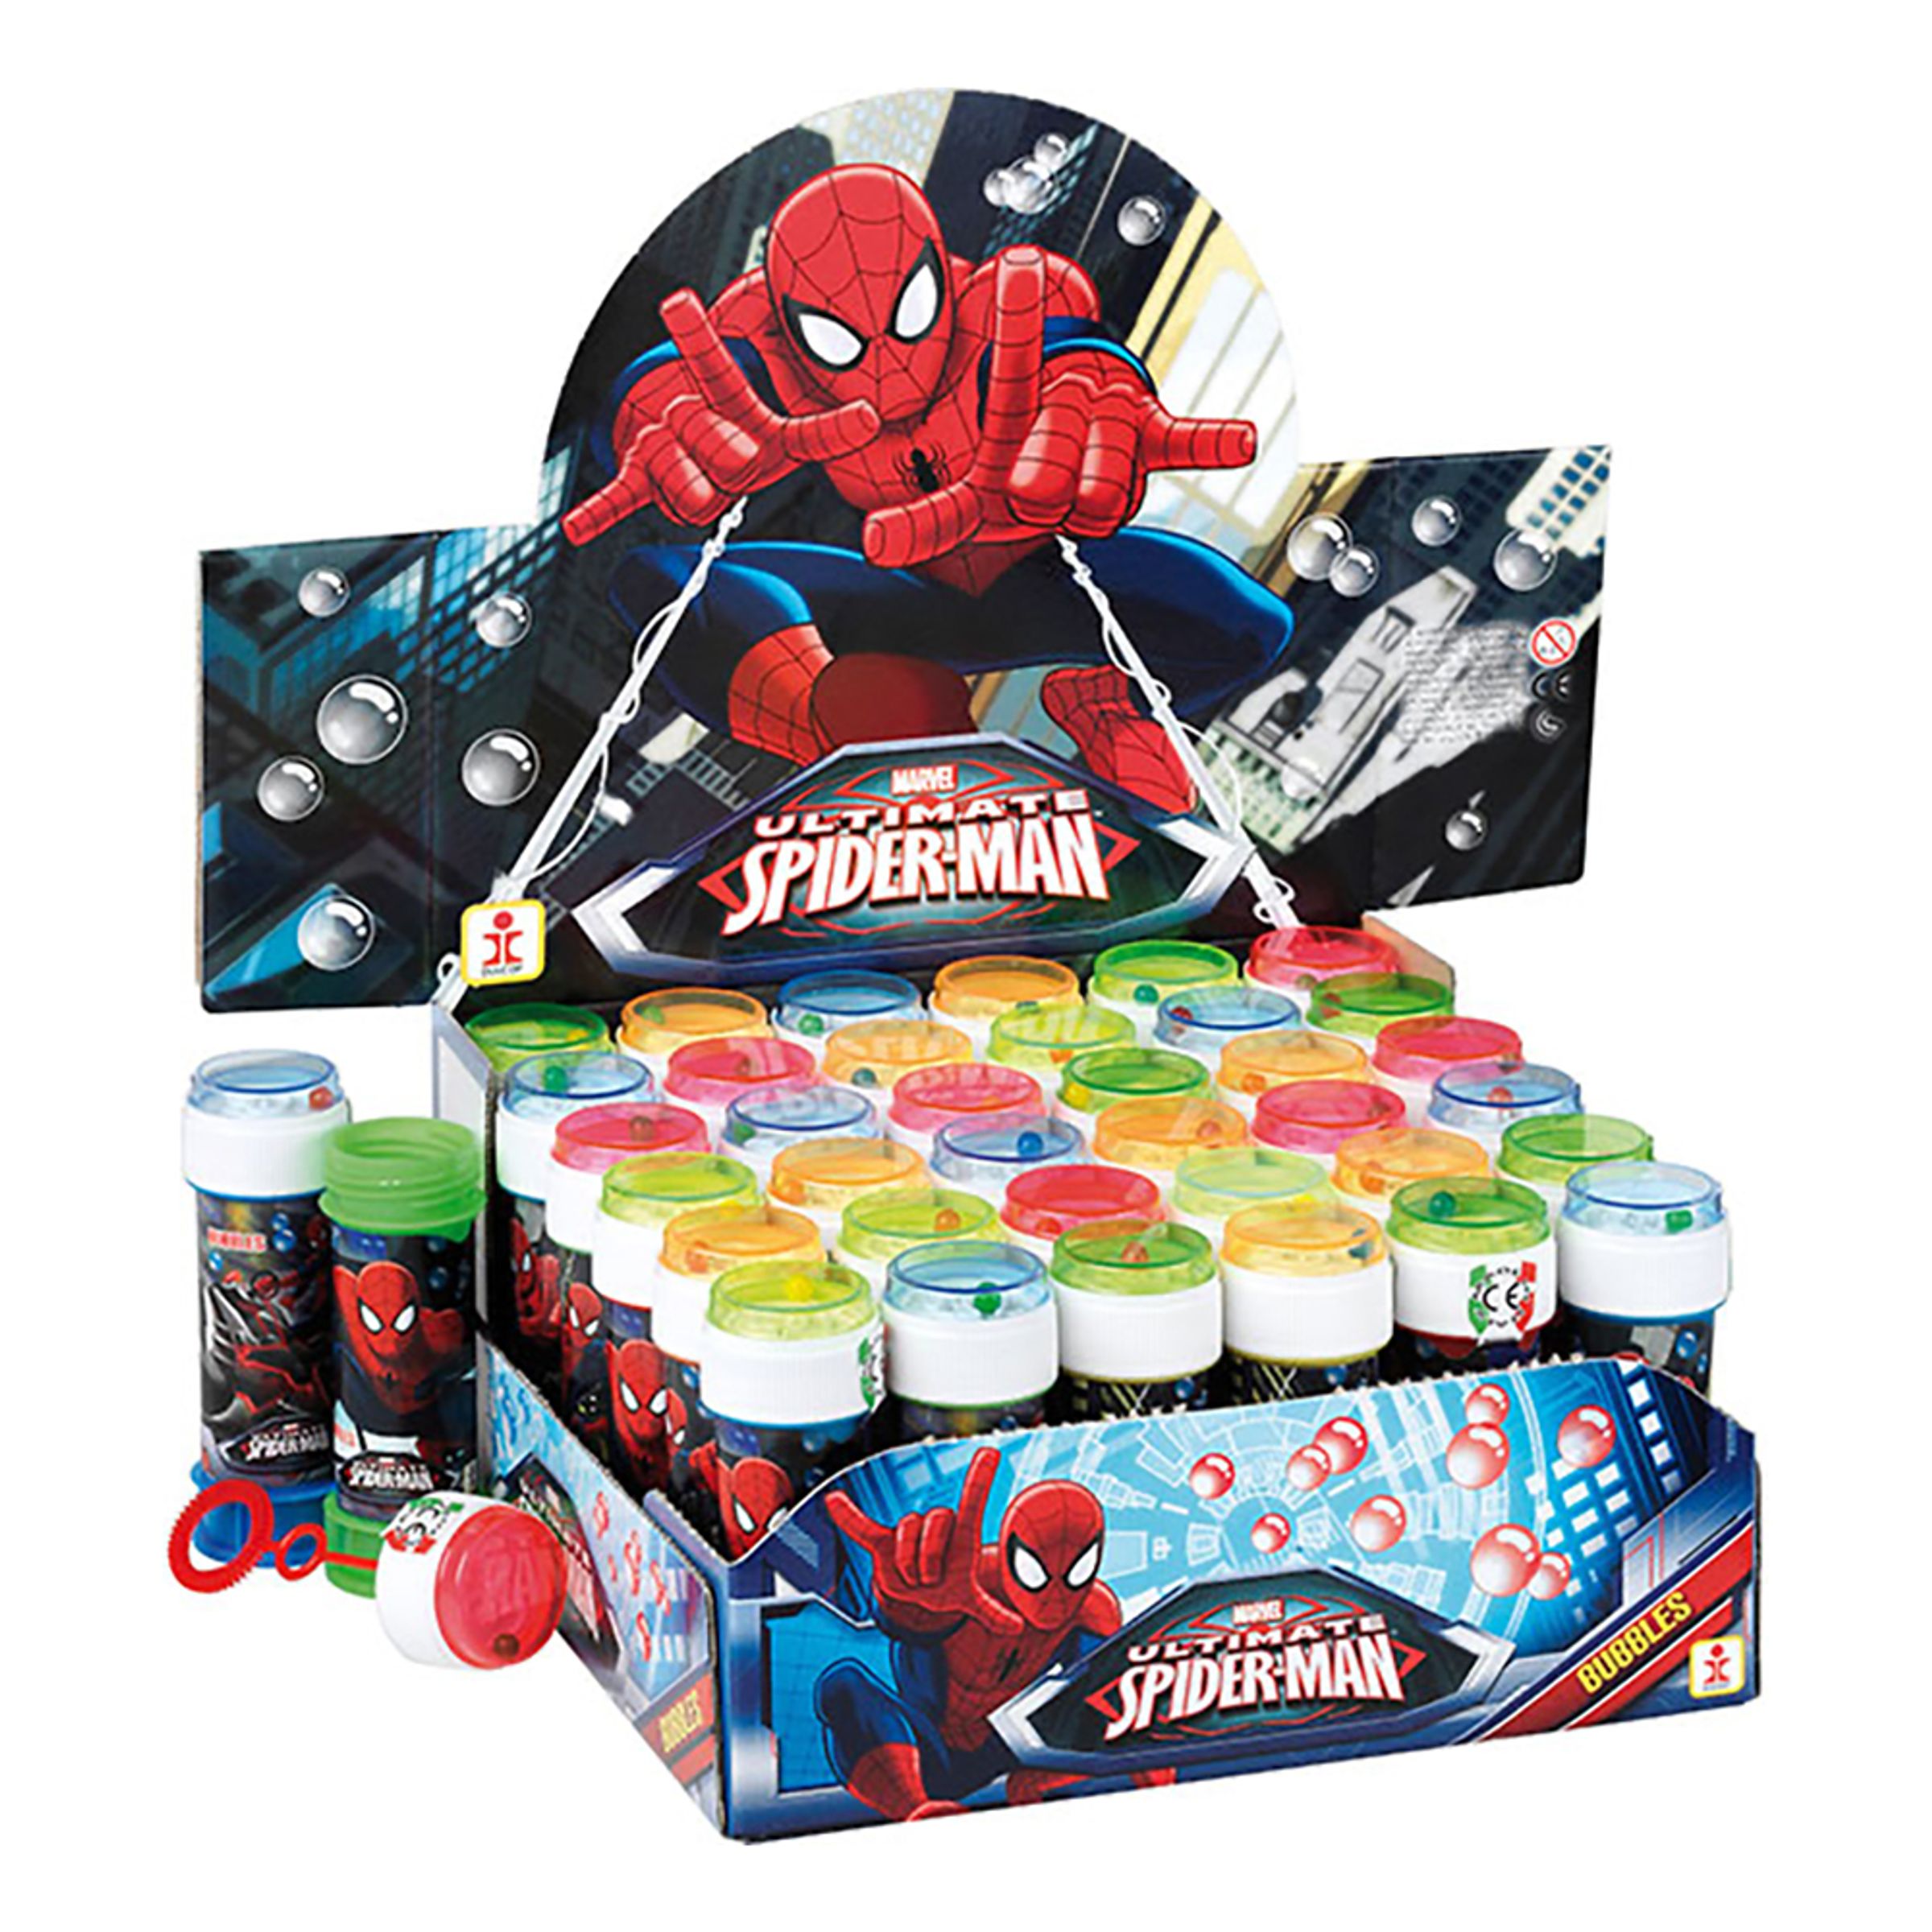 Såpbubblor Spiderman - 36-pack